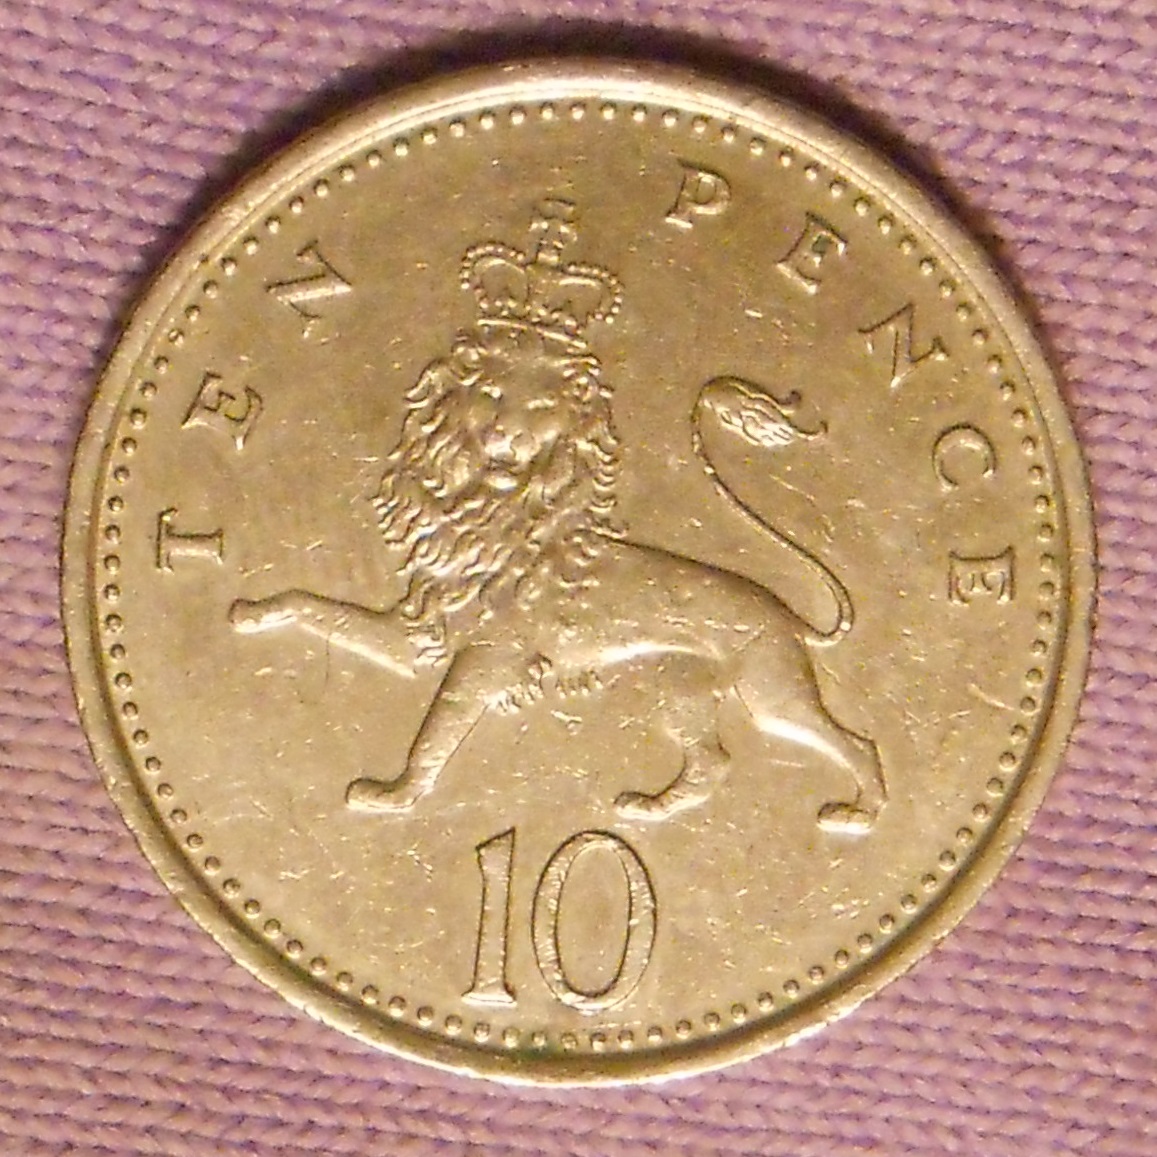 lioncoins10pence.jpg